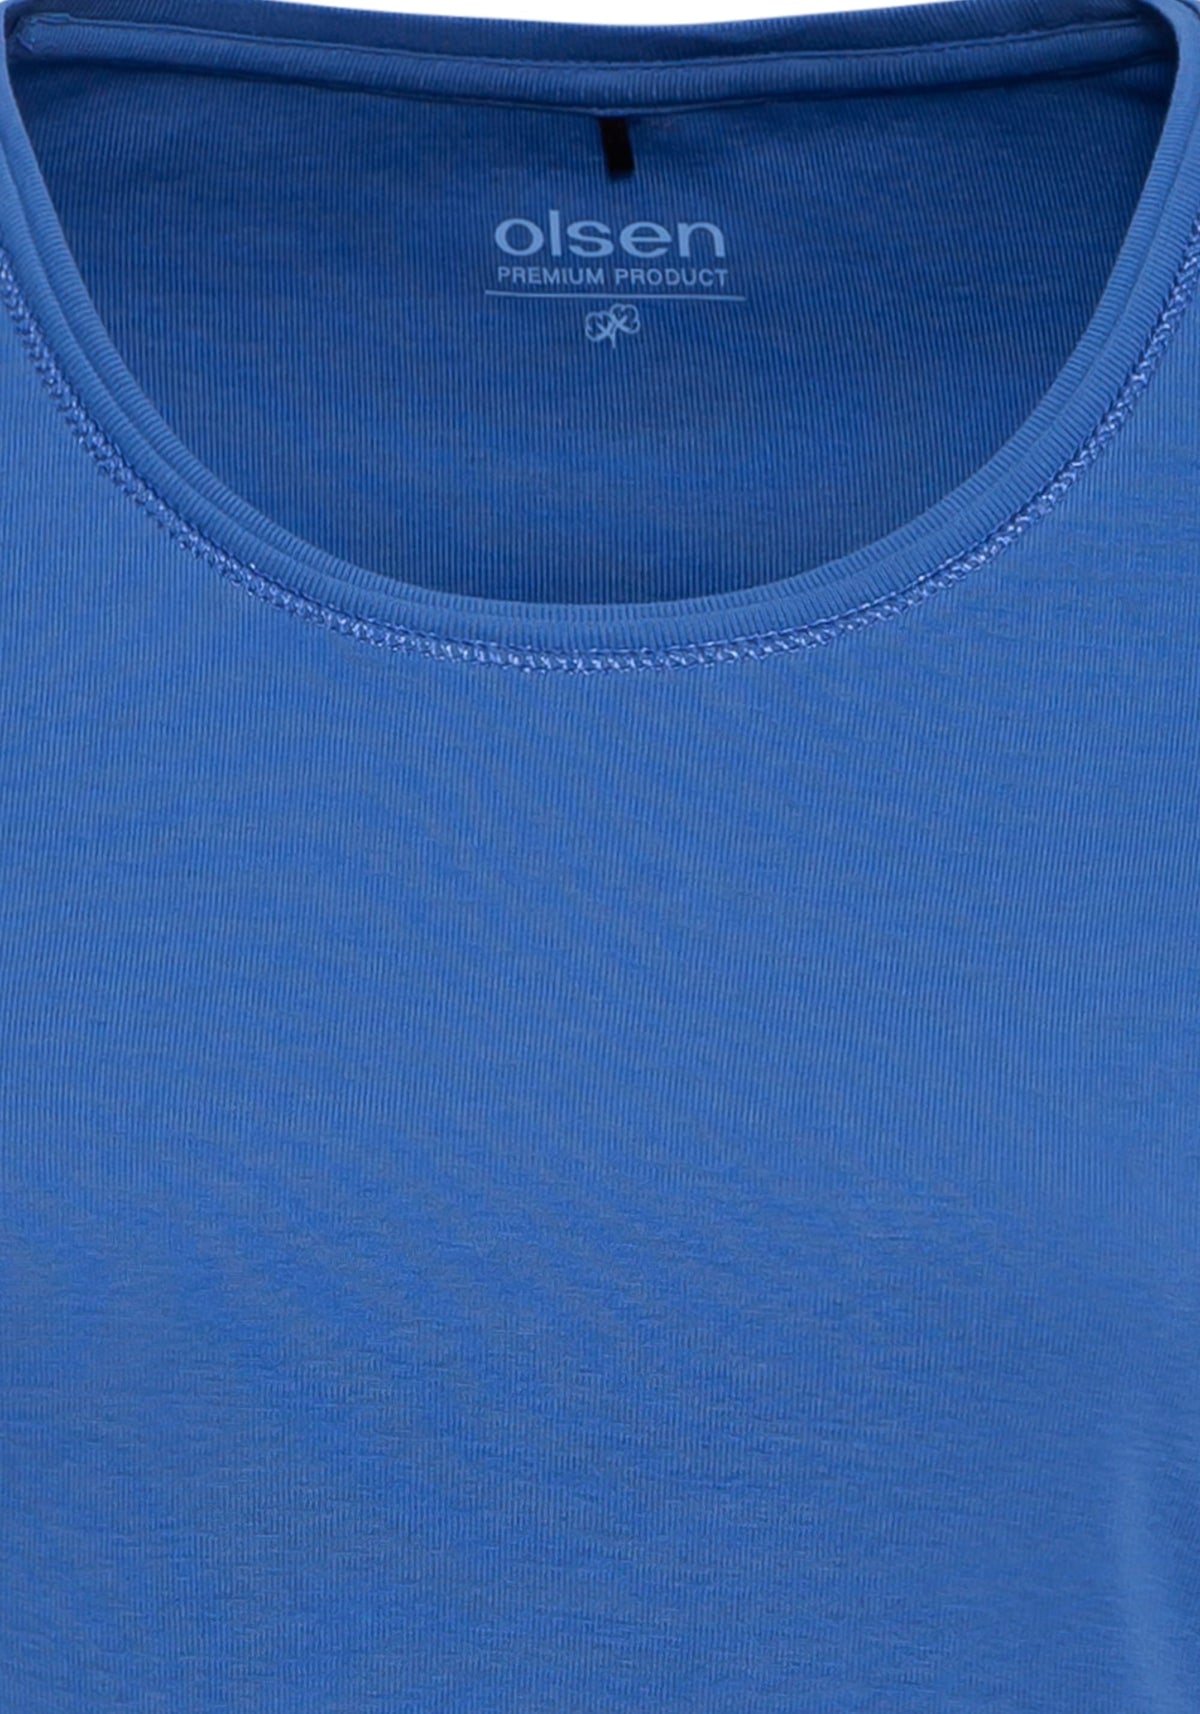 100% Cotton Long Sleeve Jewel Neck Basic T-Shirt